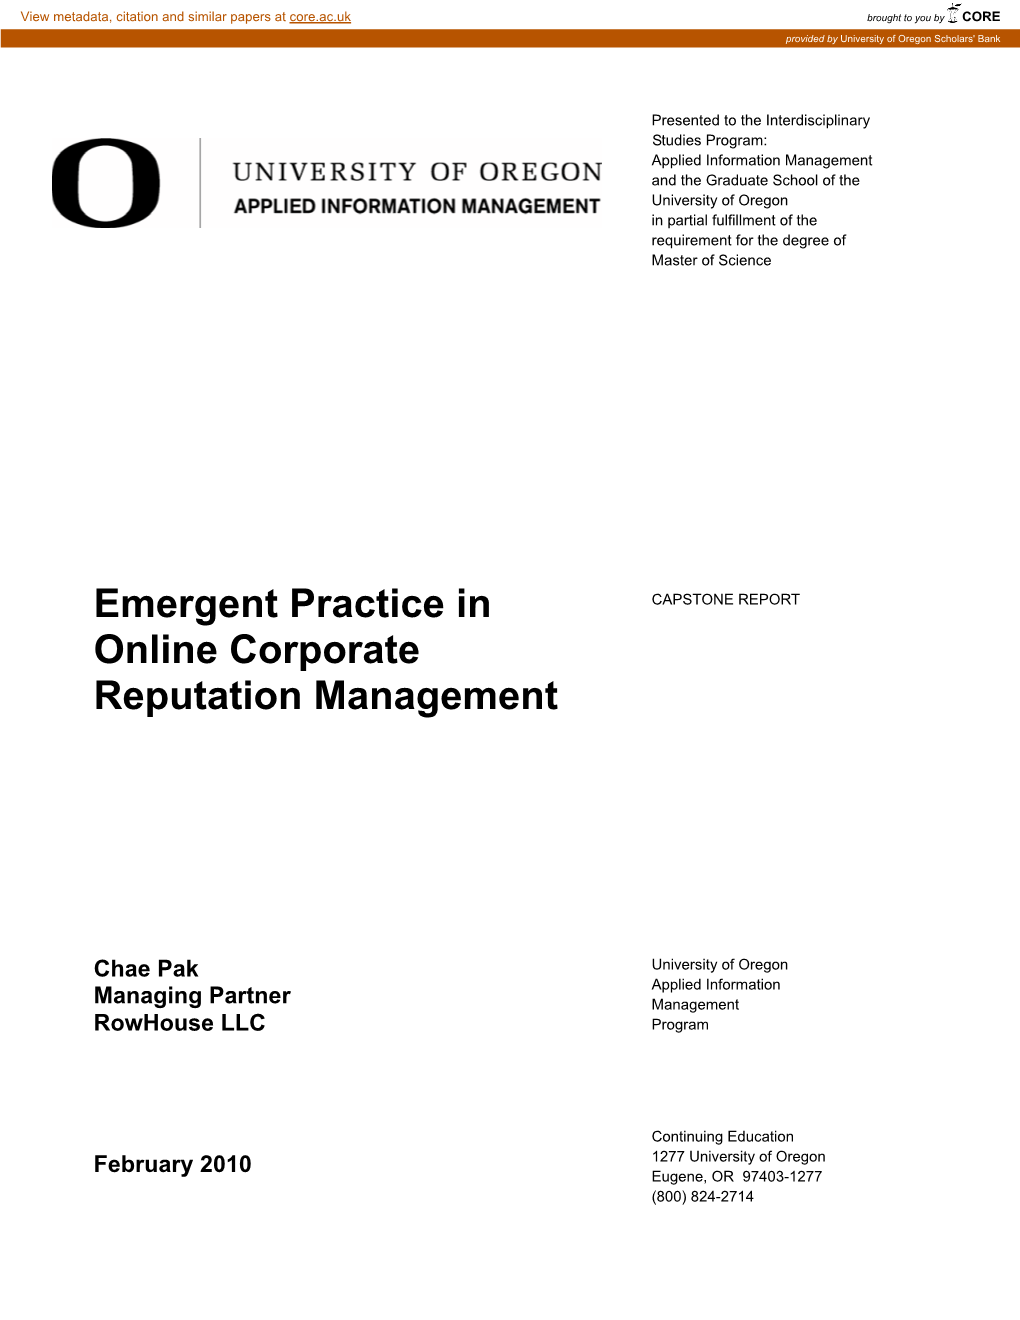 Emergent Practice in Online Corporate Reputation Management